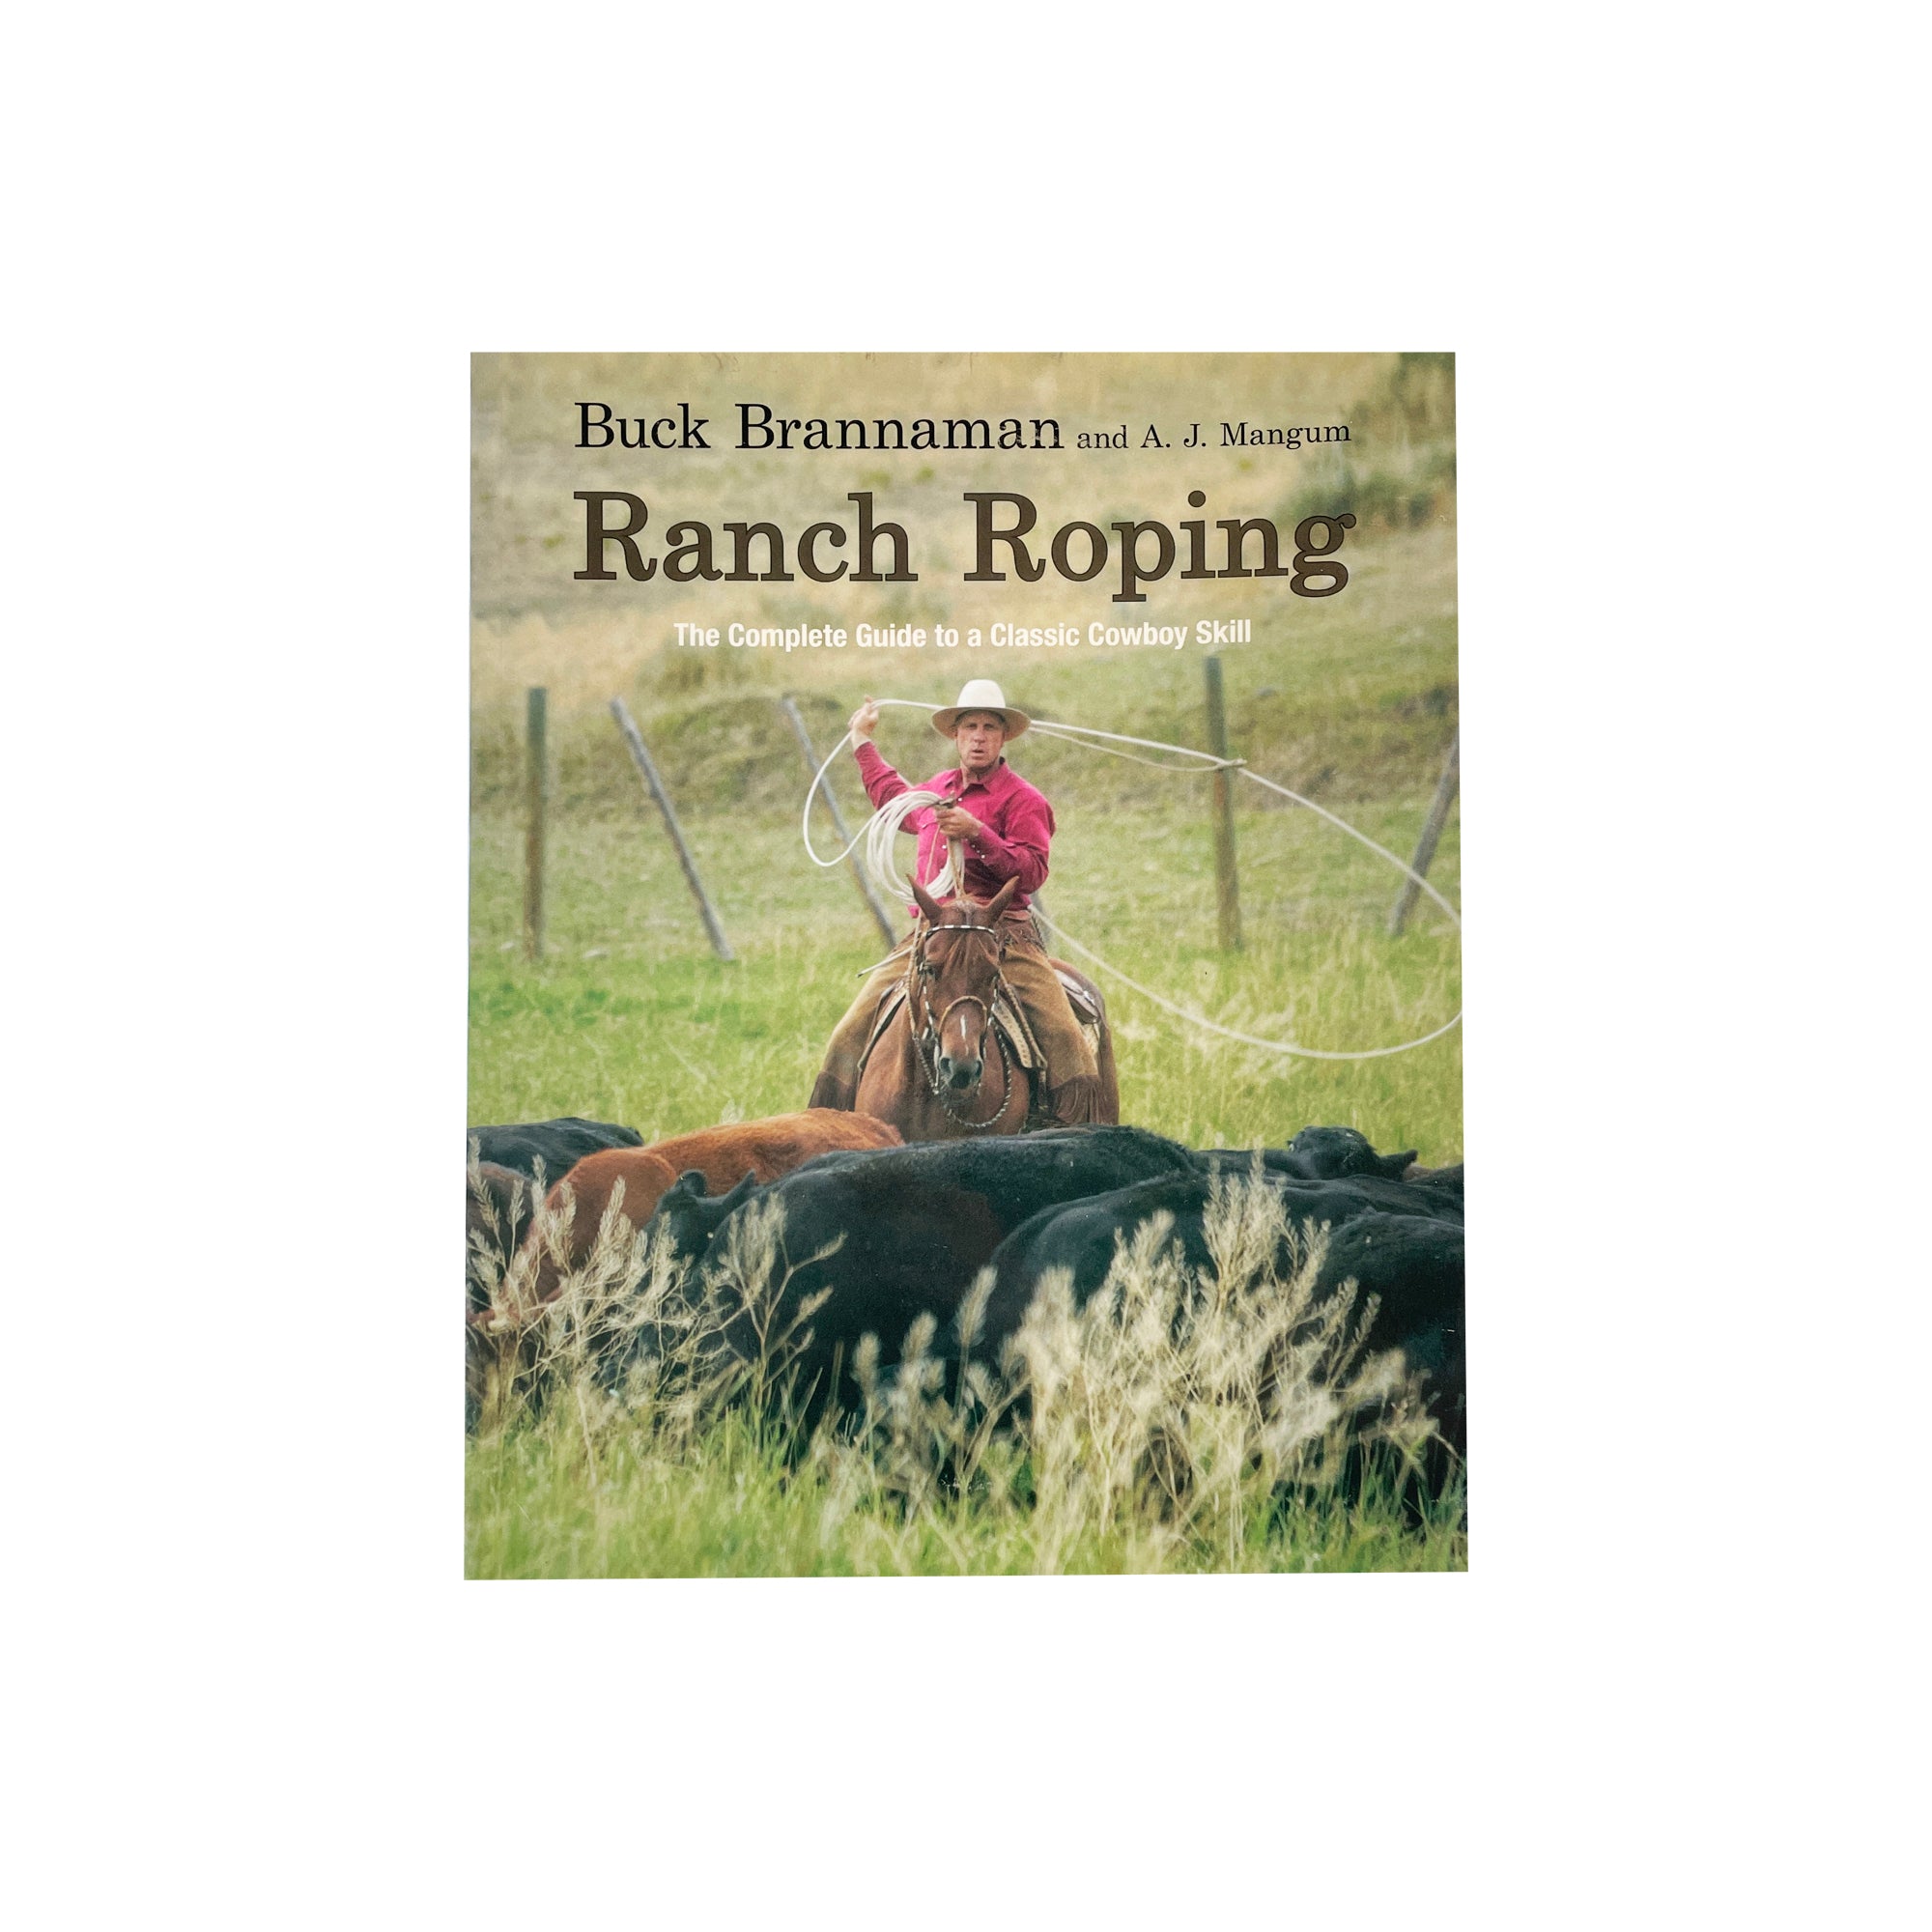 Ranch Roping book by Buck Brannaman